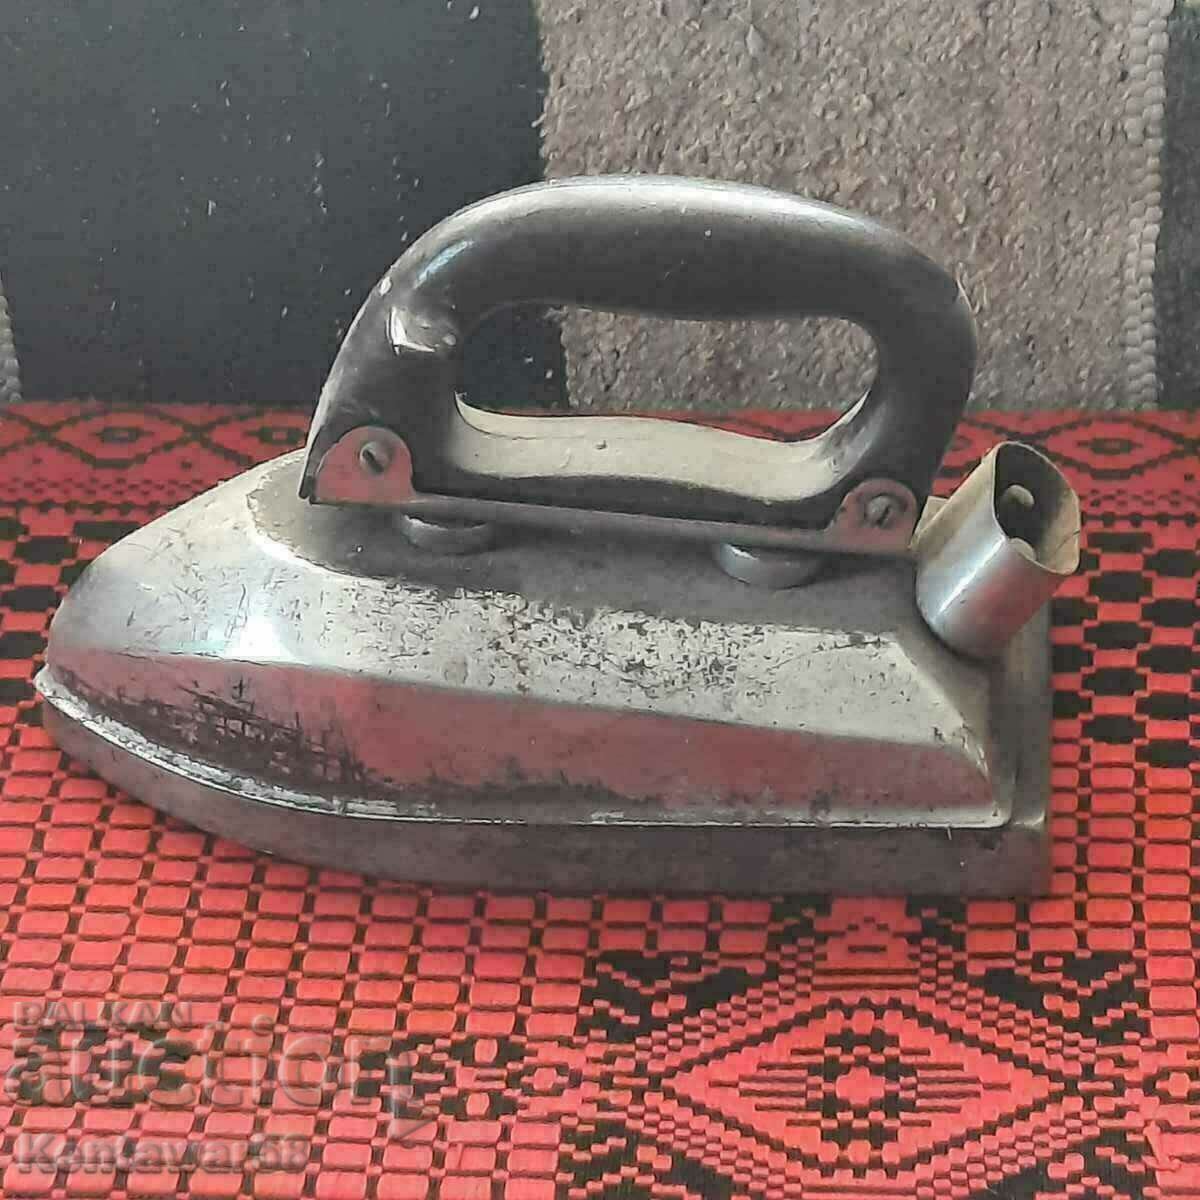 Electric iron with bakelite handle.